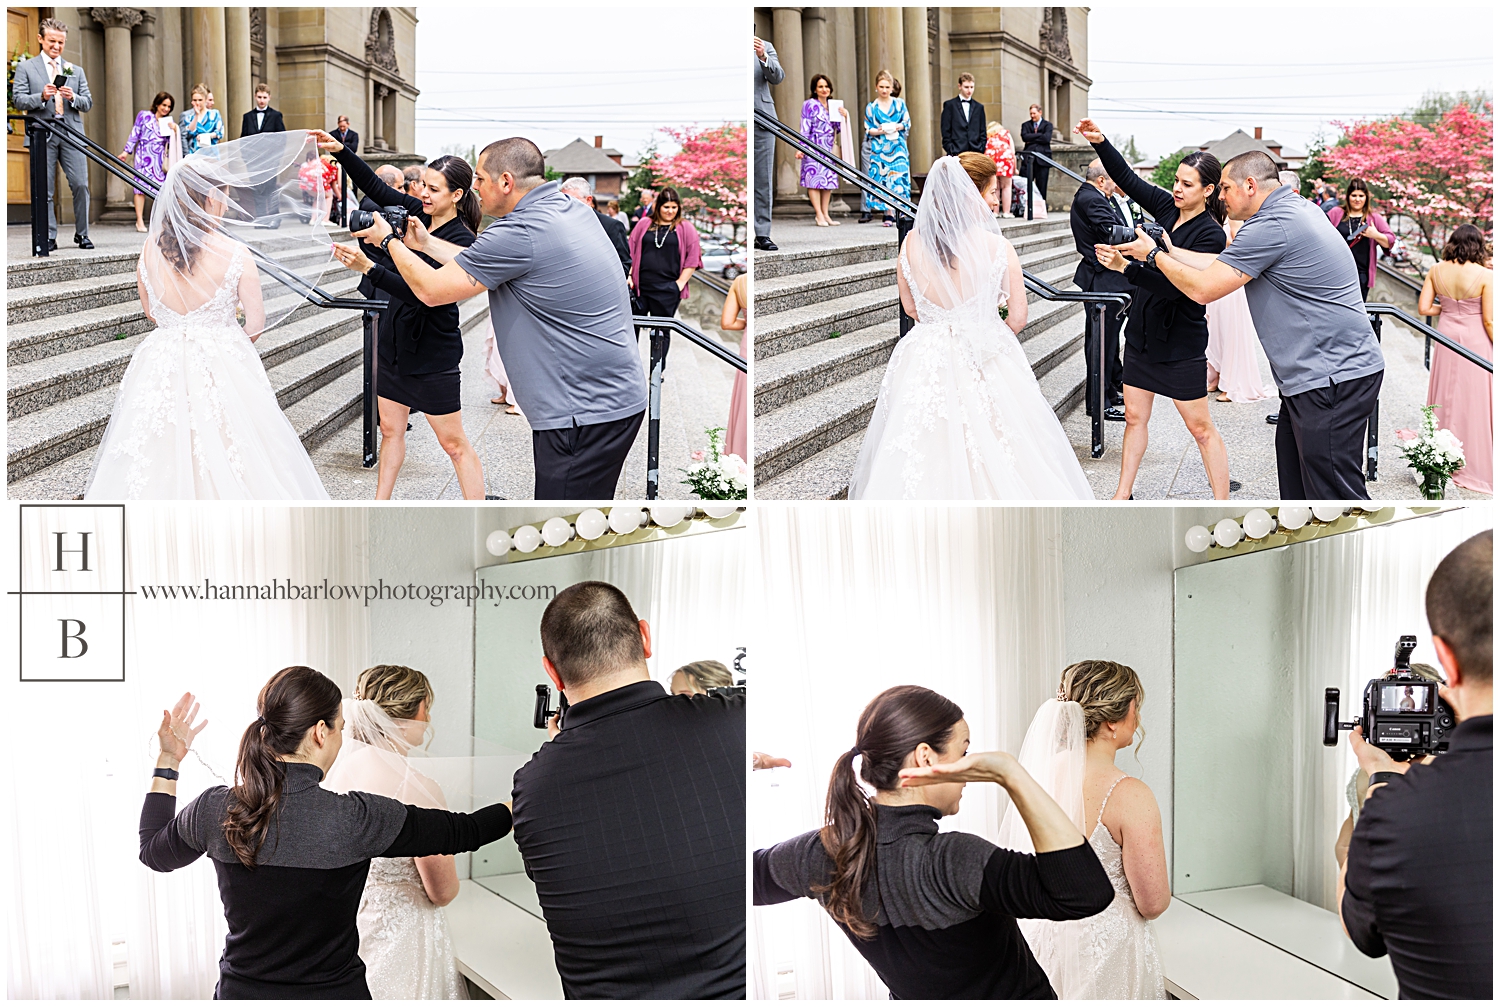 Wedding photographer helps wedding videographer with veil